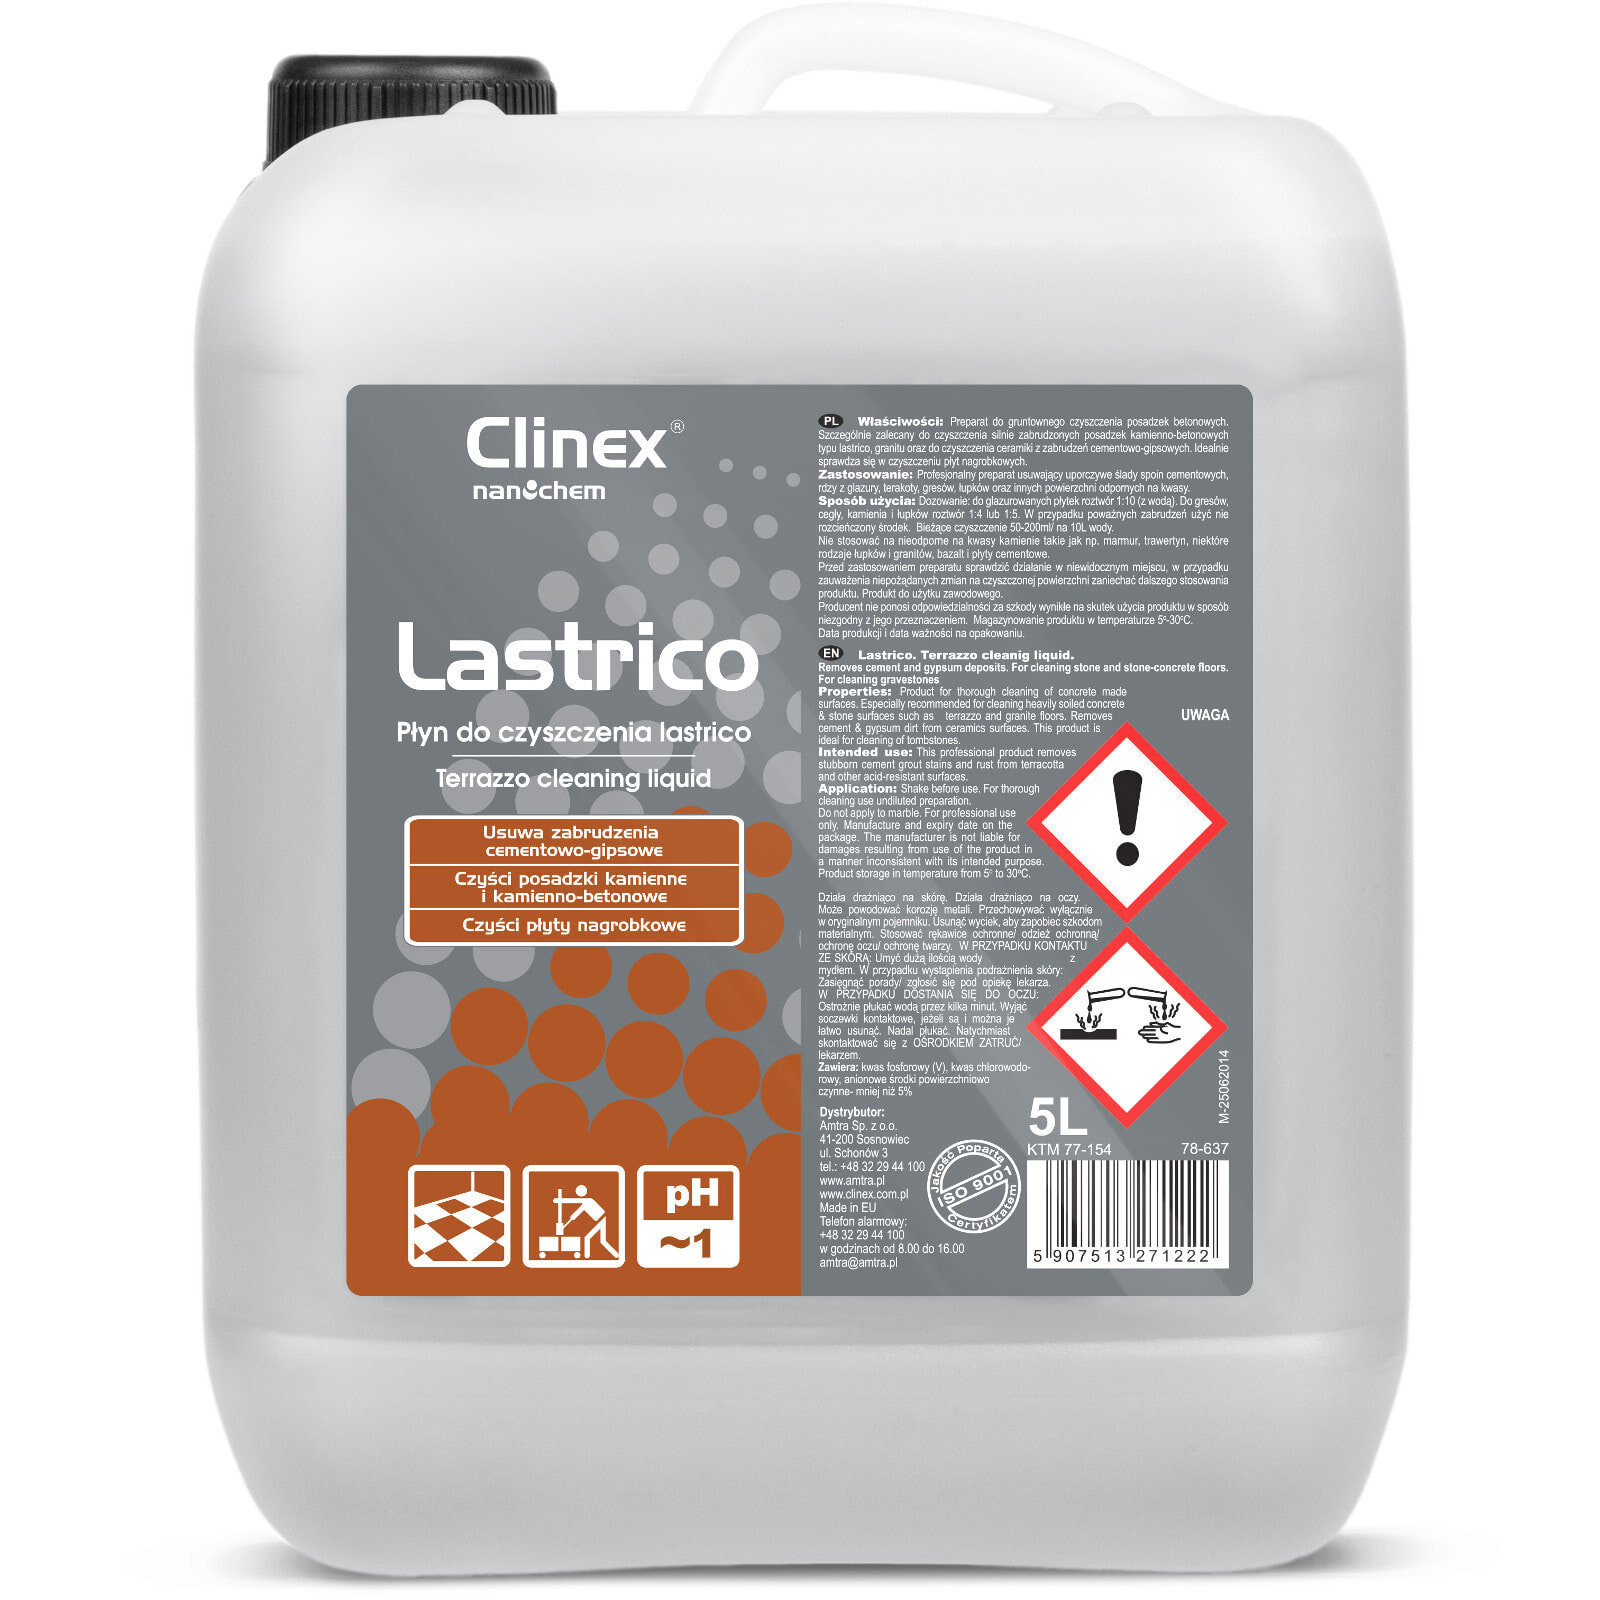 CLINEX Lastrico 5L liquid for cleaning stone floors, concrete floors